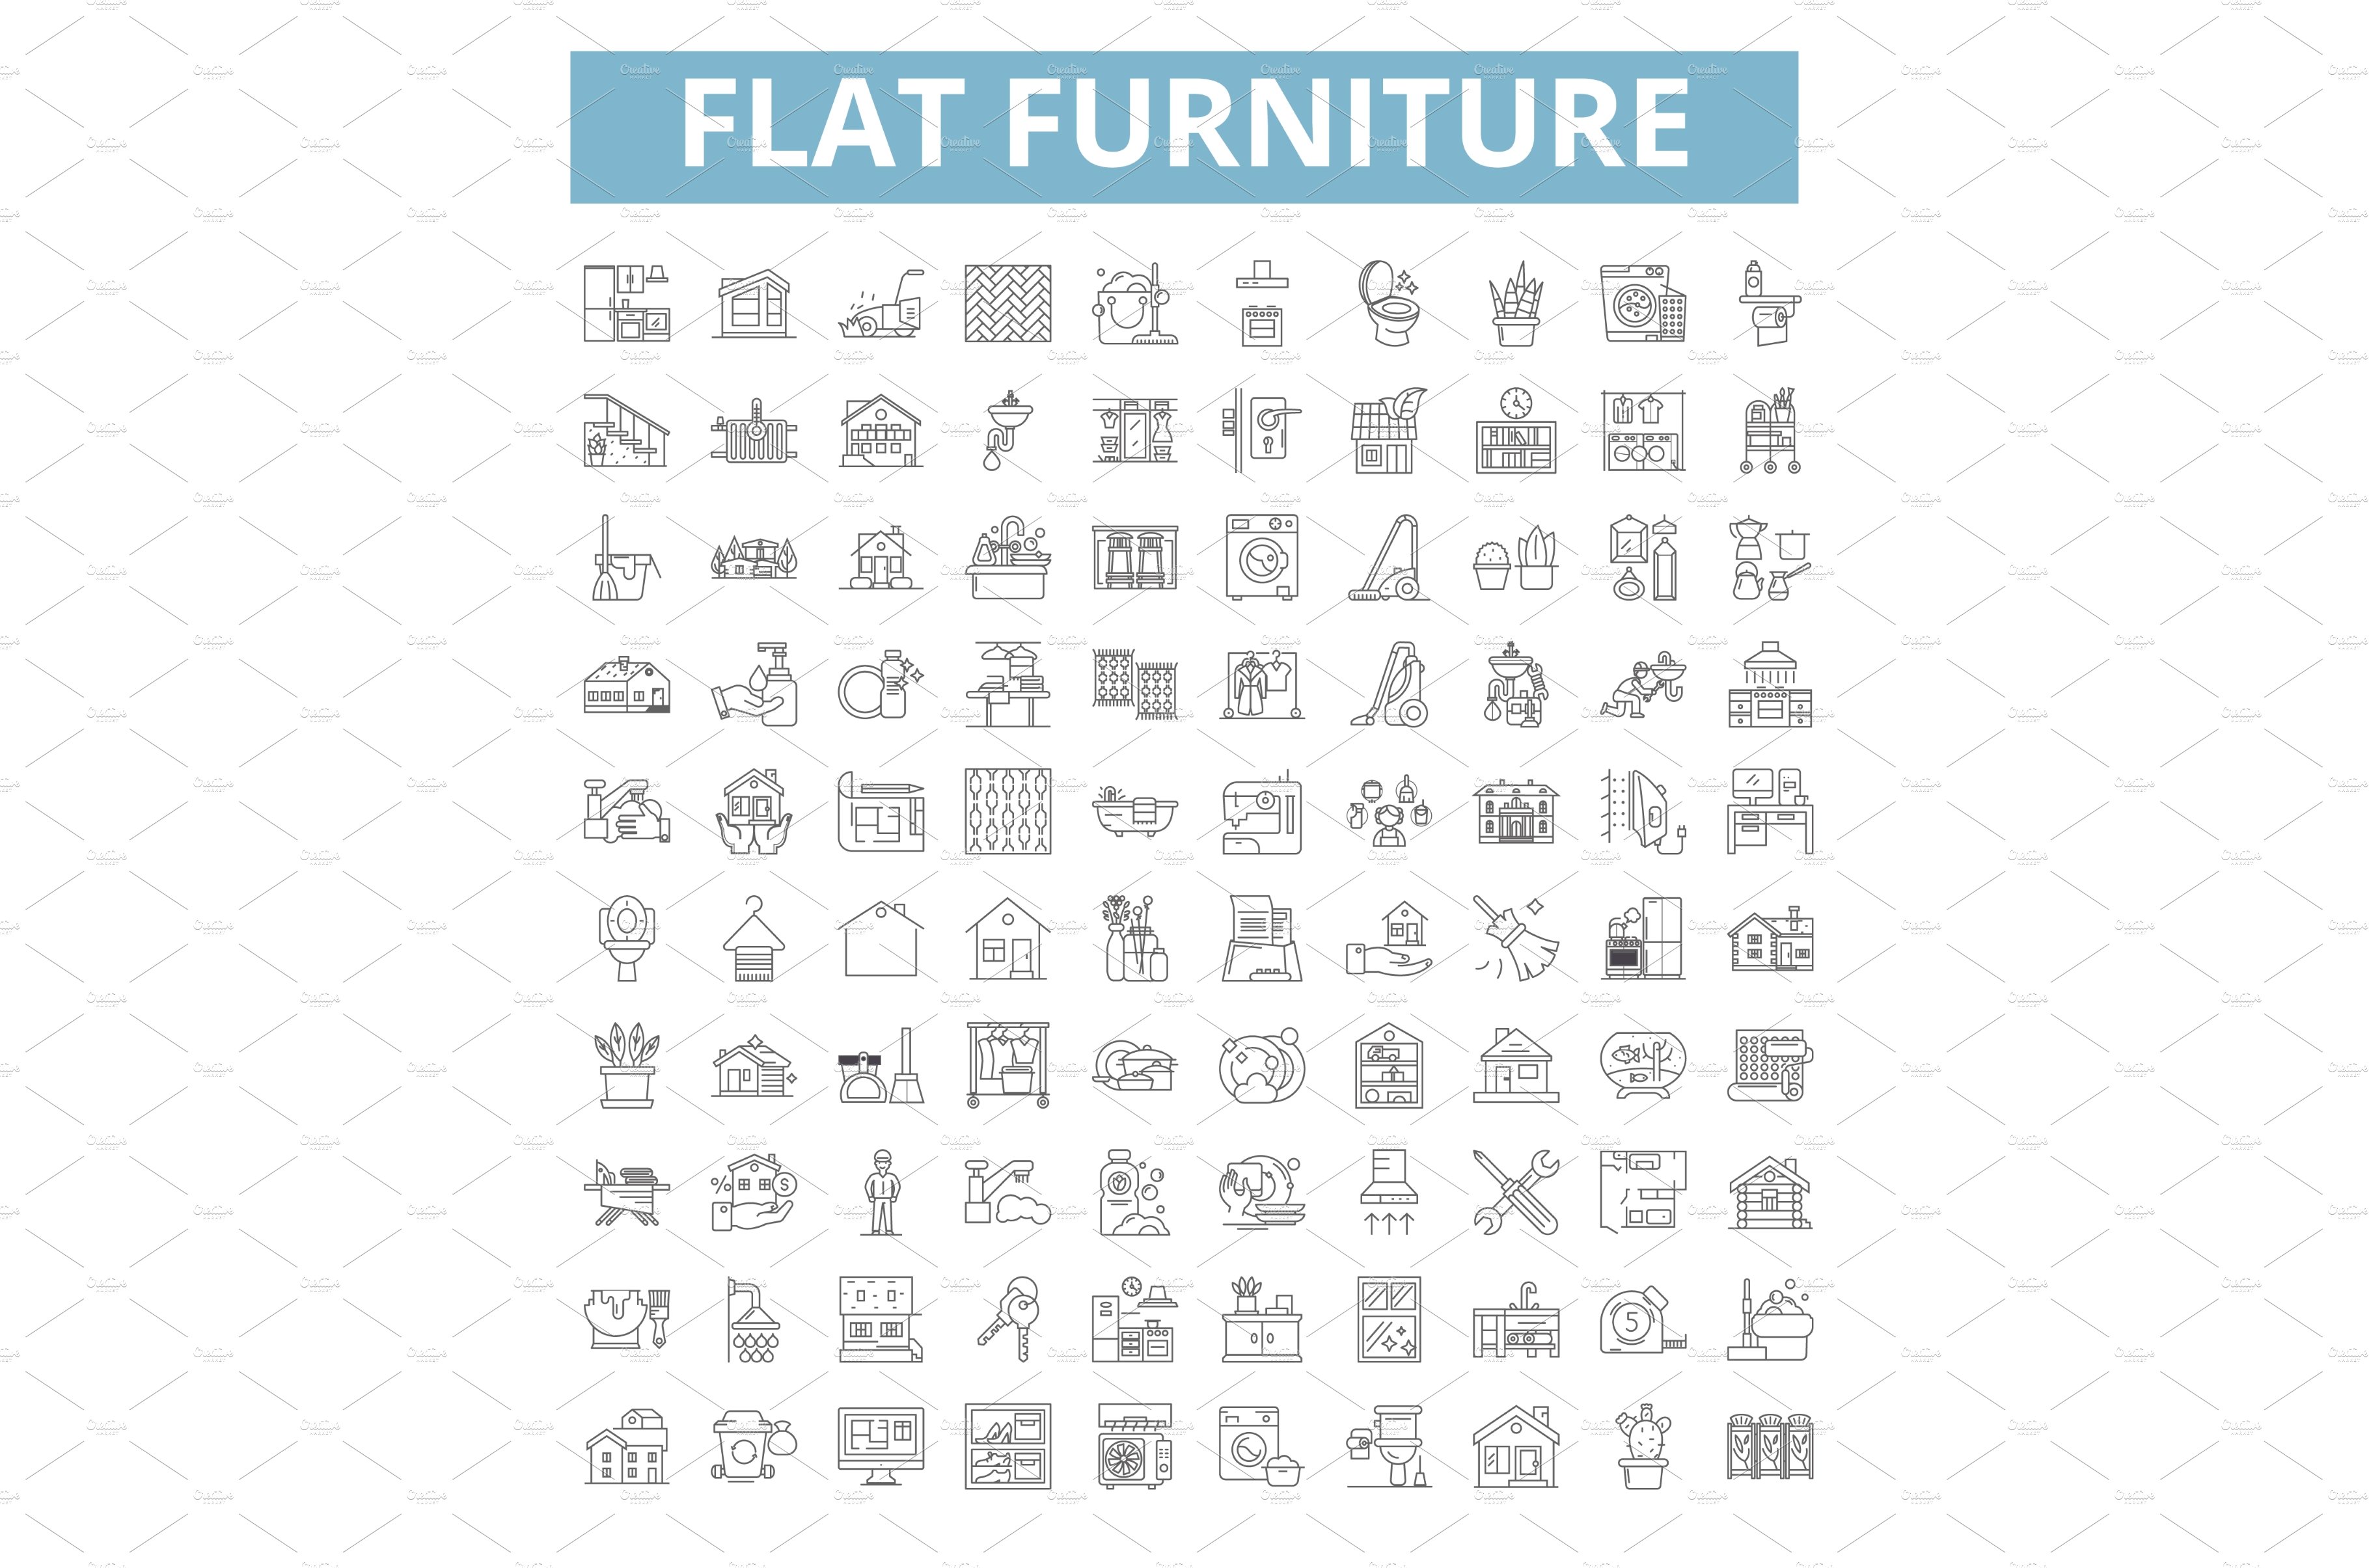 Flat furniture icons, line symbols cover image.